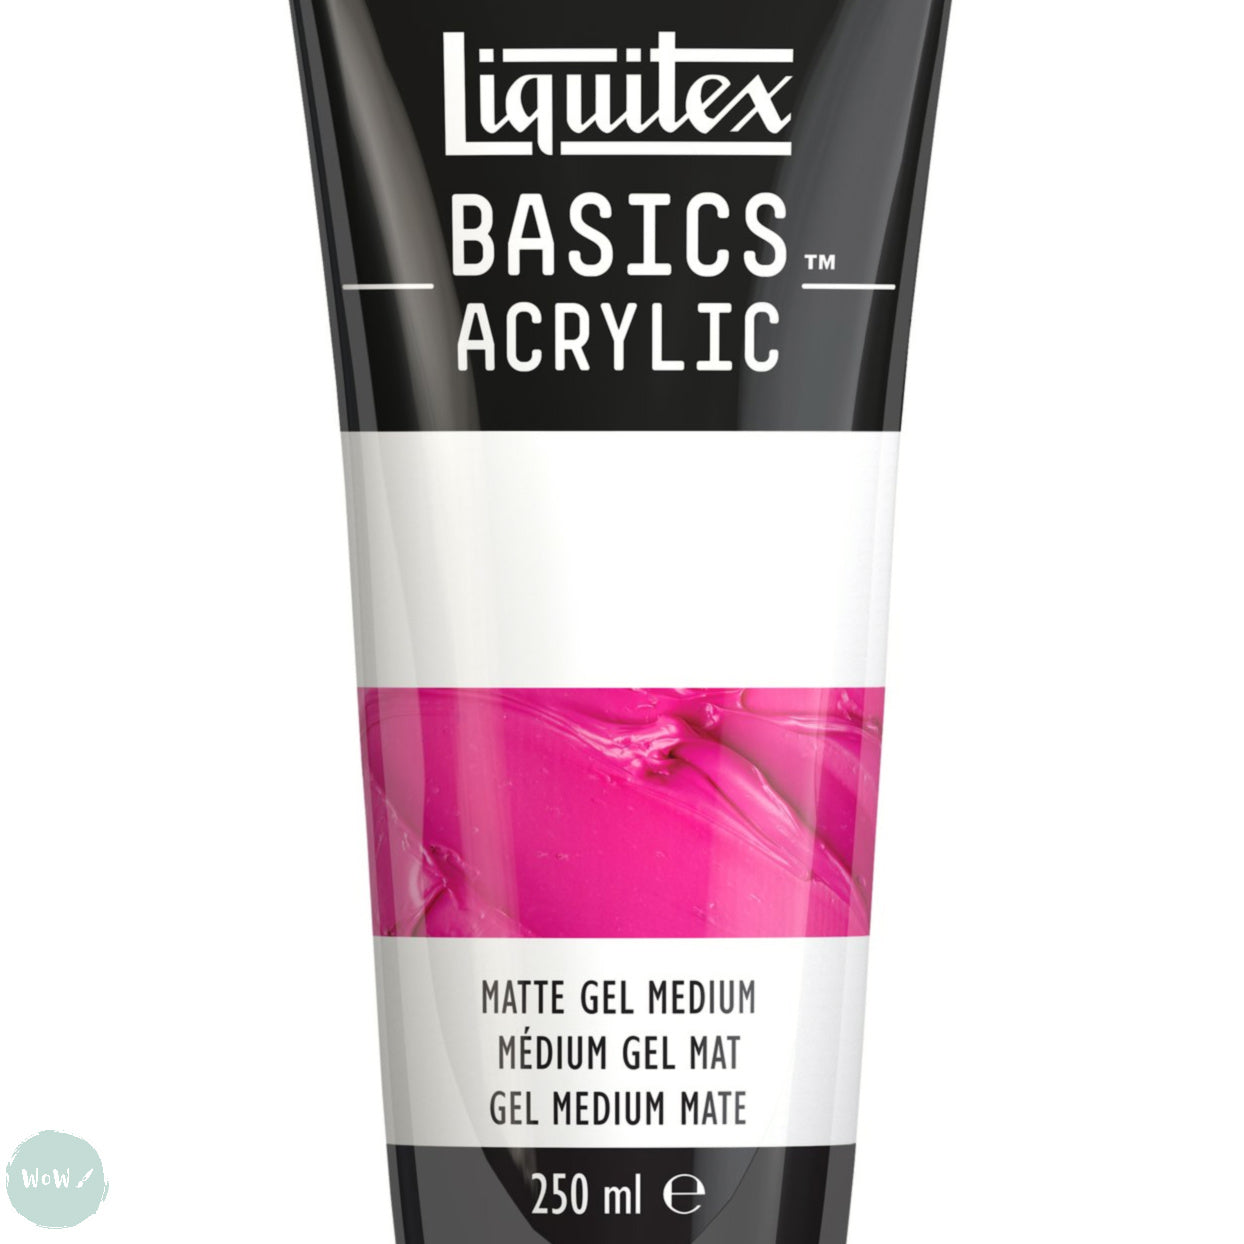 Liquitex Basics Acrylic Mediums - Matte Fluid Medium, 250ml